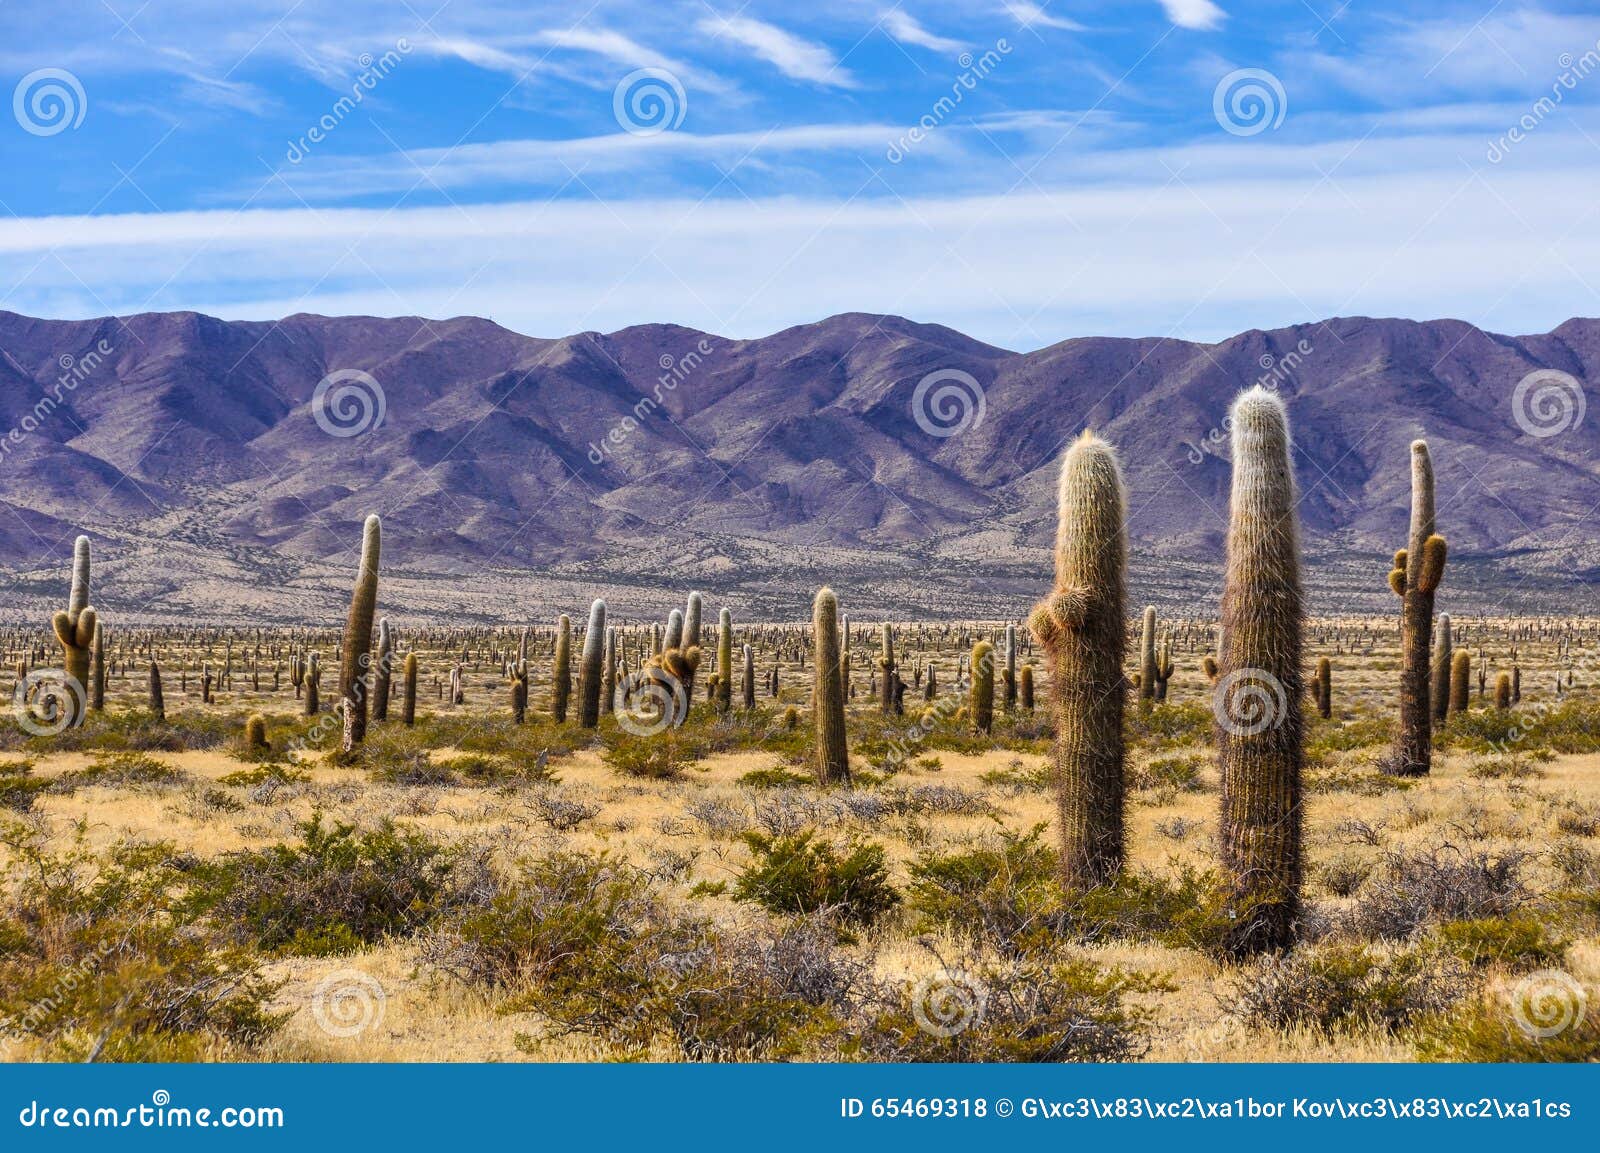 fax tin Tarif Cactus Forest in Los Cardones National Park, Argentina Stock Photo - Image  of scenic, arid: 65469318